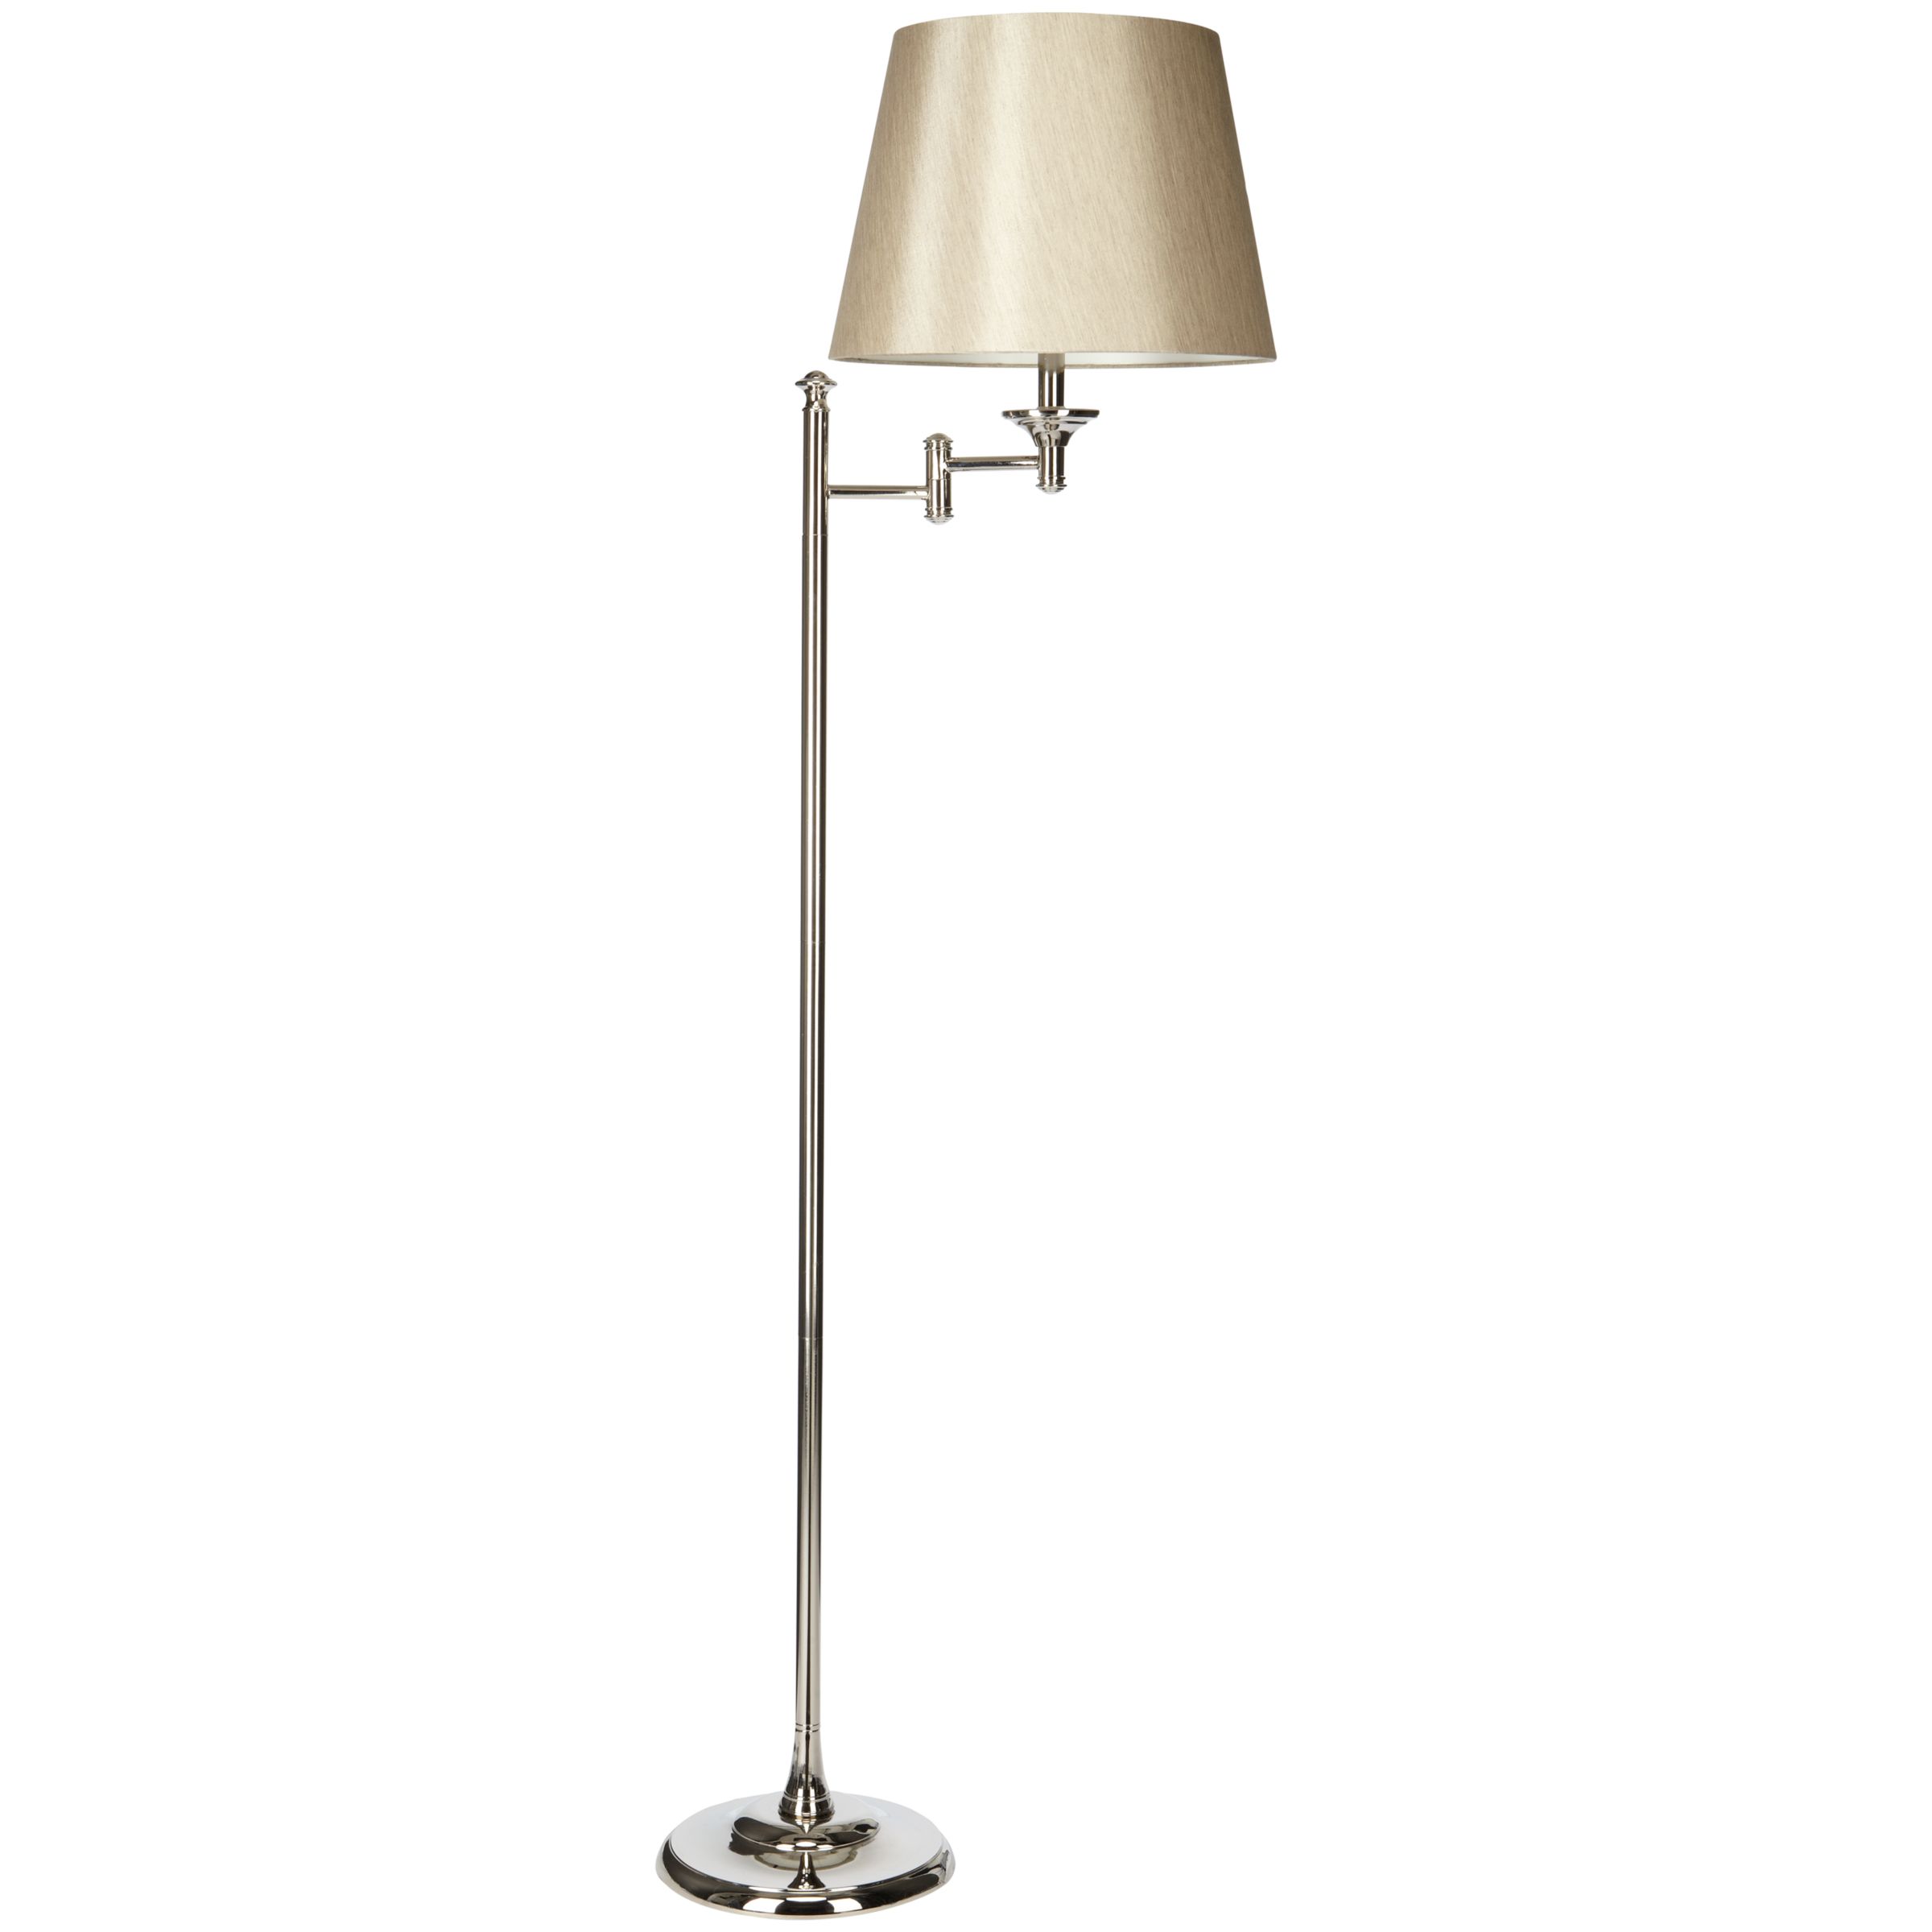 John Lewis Dominic Floor Lamp, Nickel